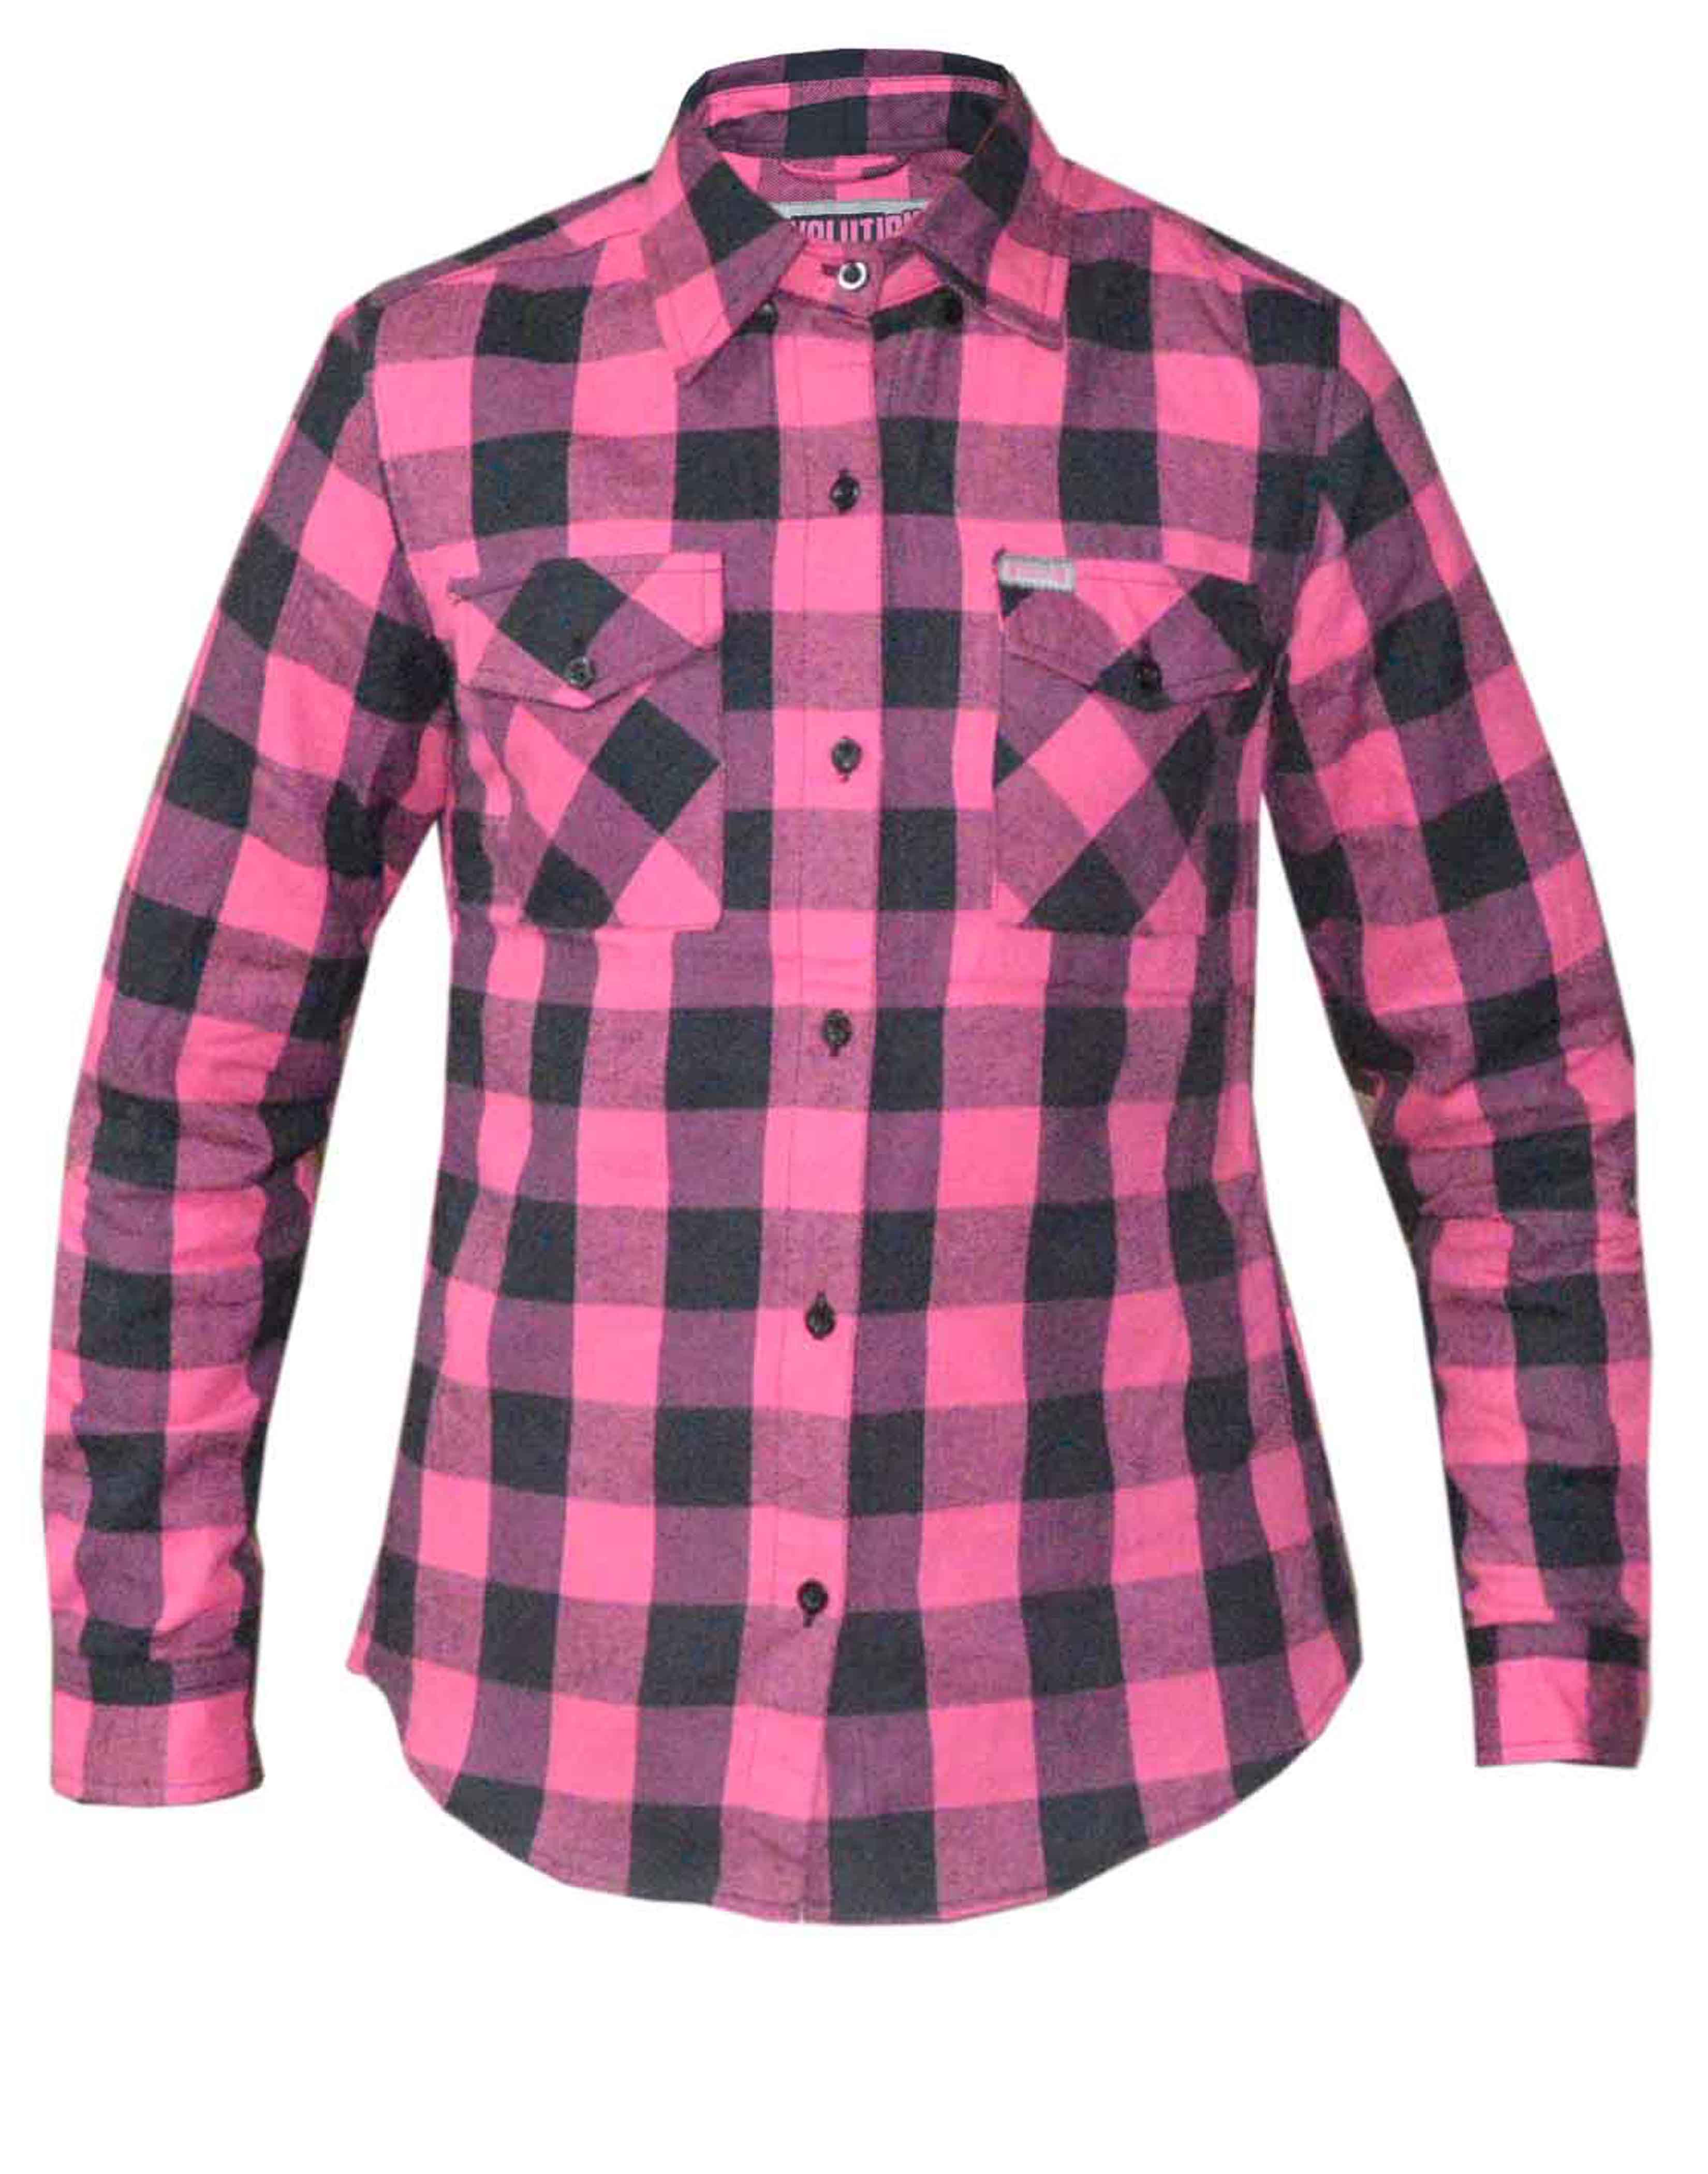 Unik International Ladies Black and Pink Flannel Shirt